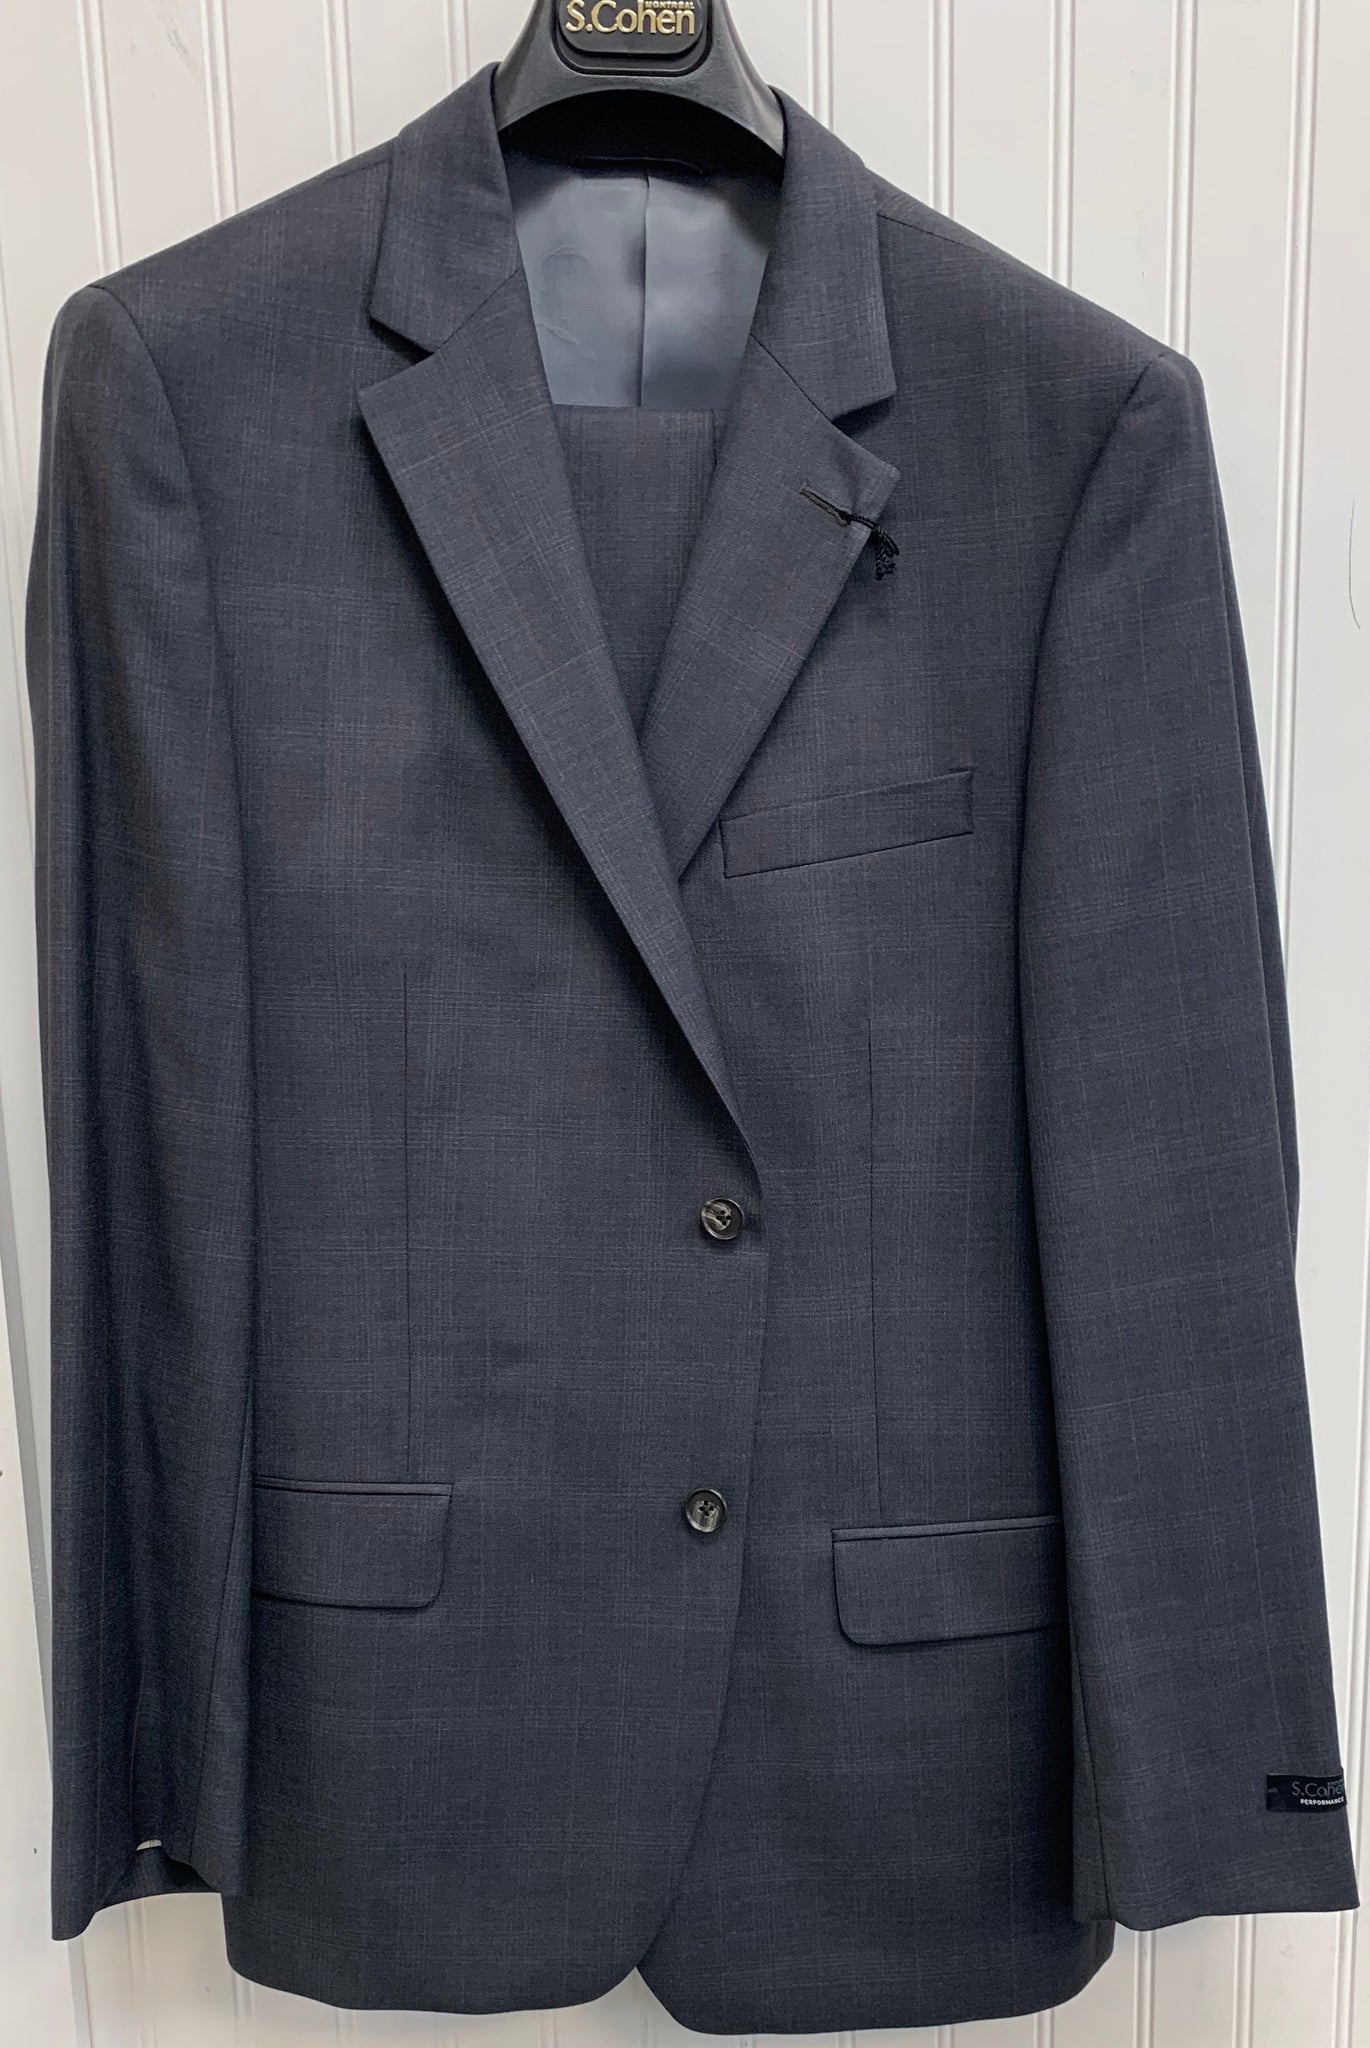 S. Cohen Performance Wool Suit- 89-1266 (Gray w/Mauve Windowpane)